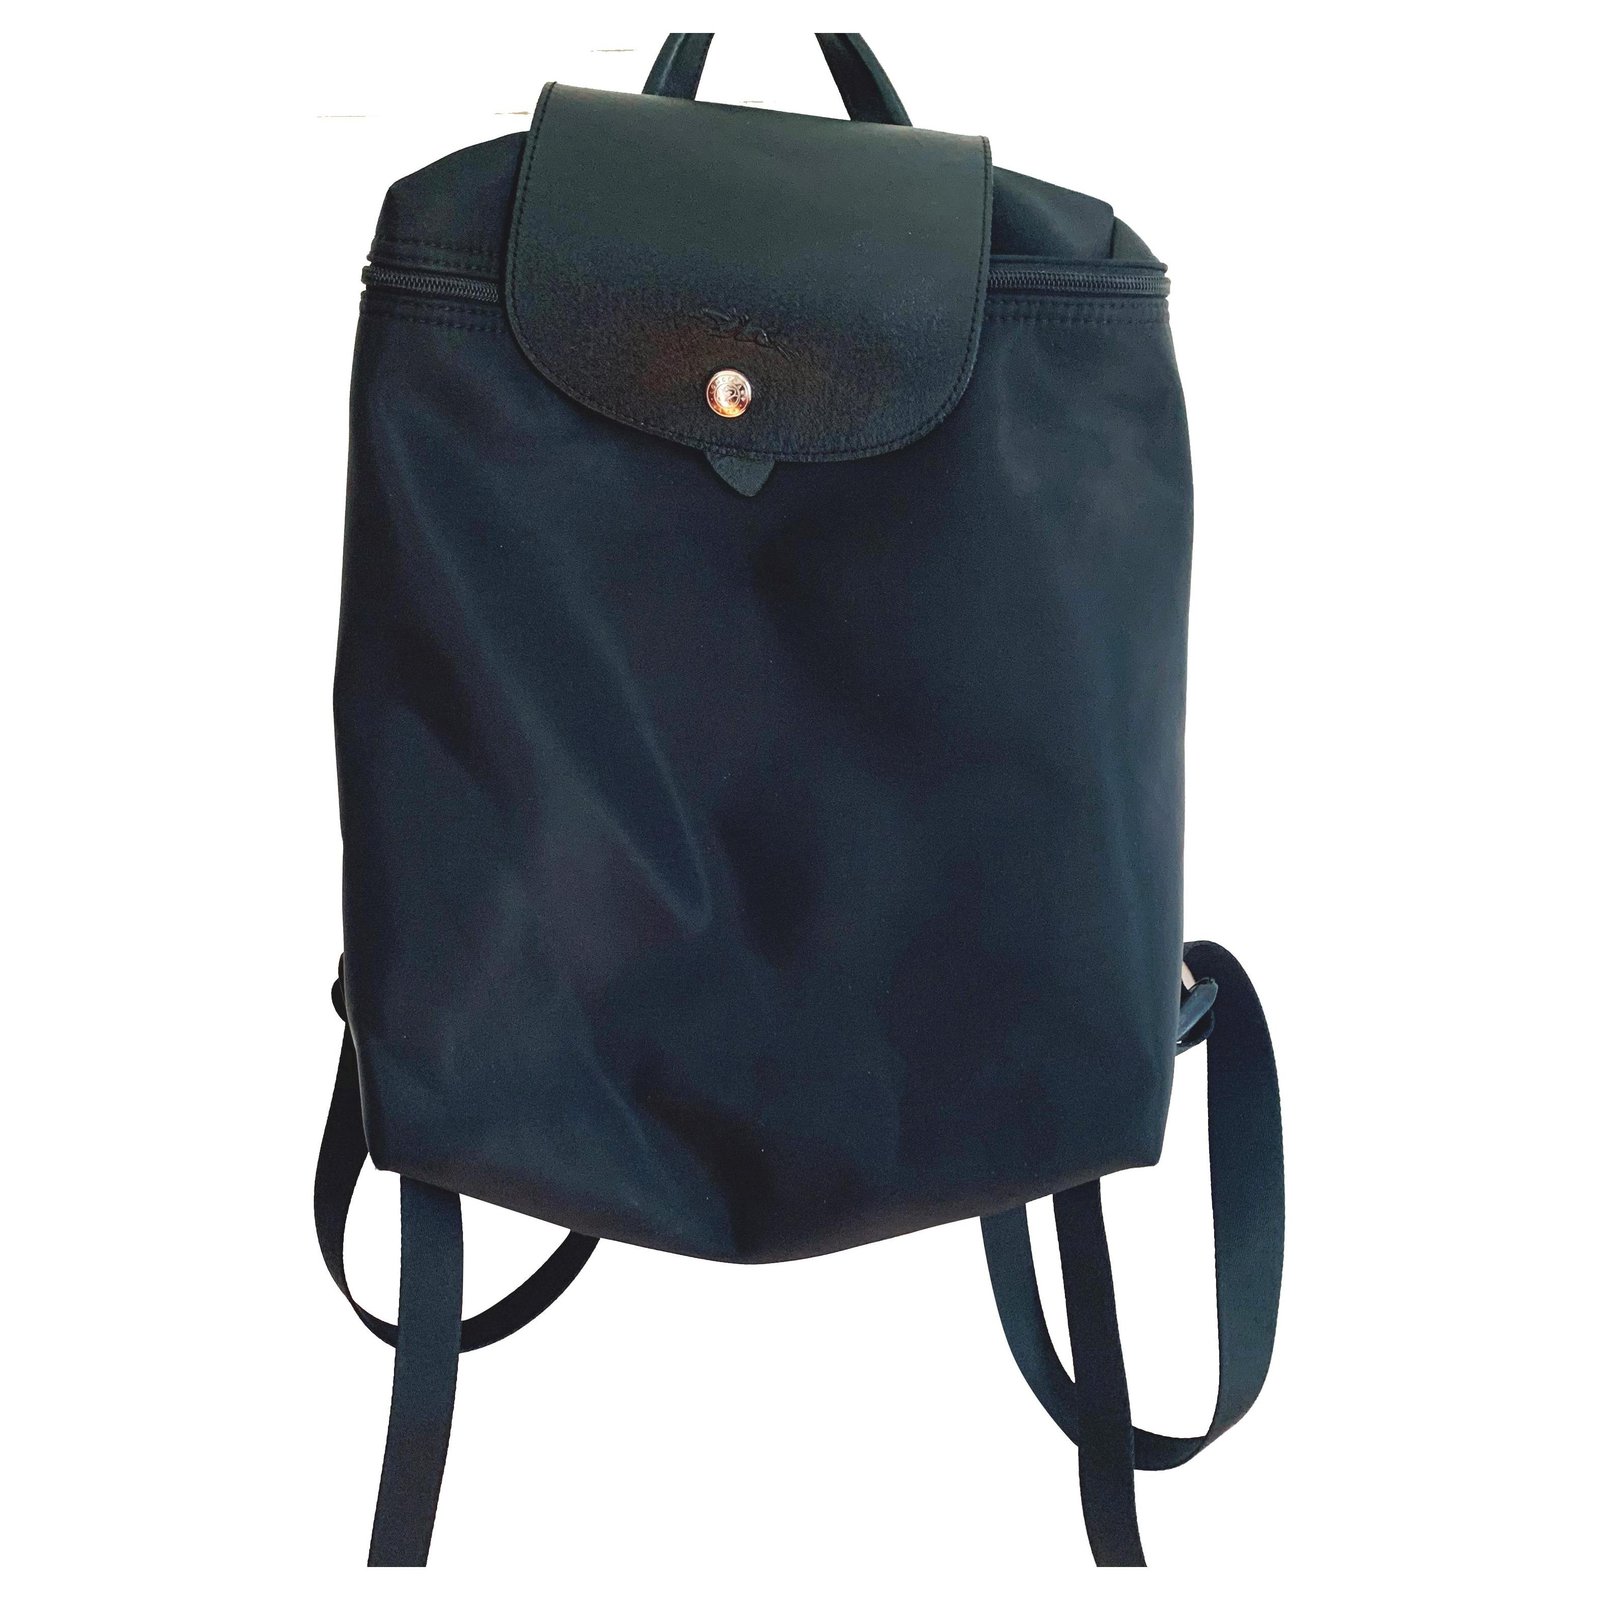 longchamp backpack folded